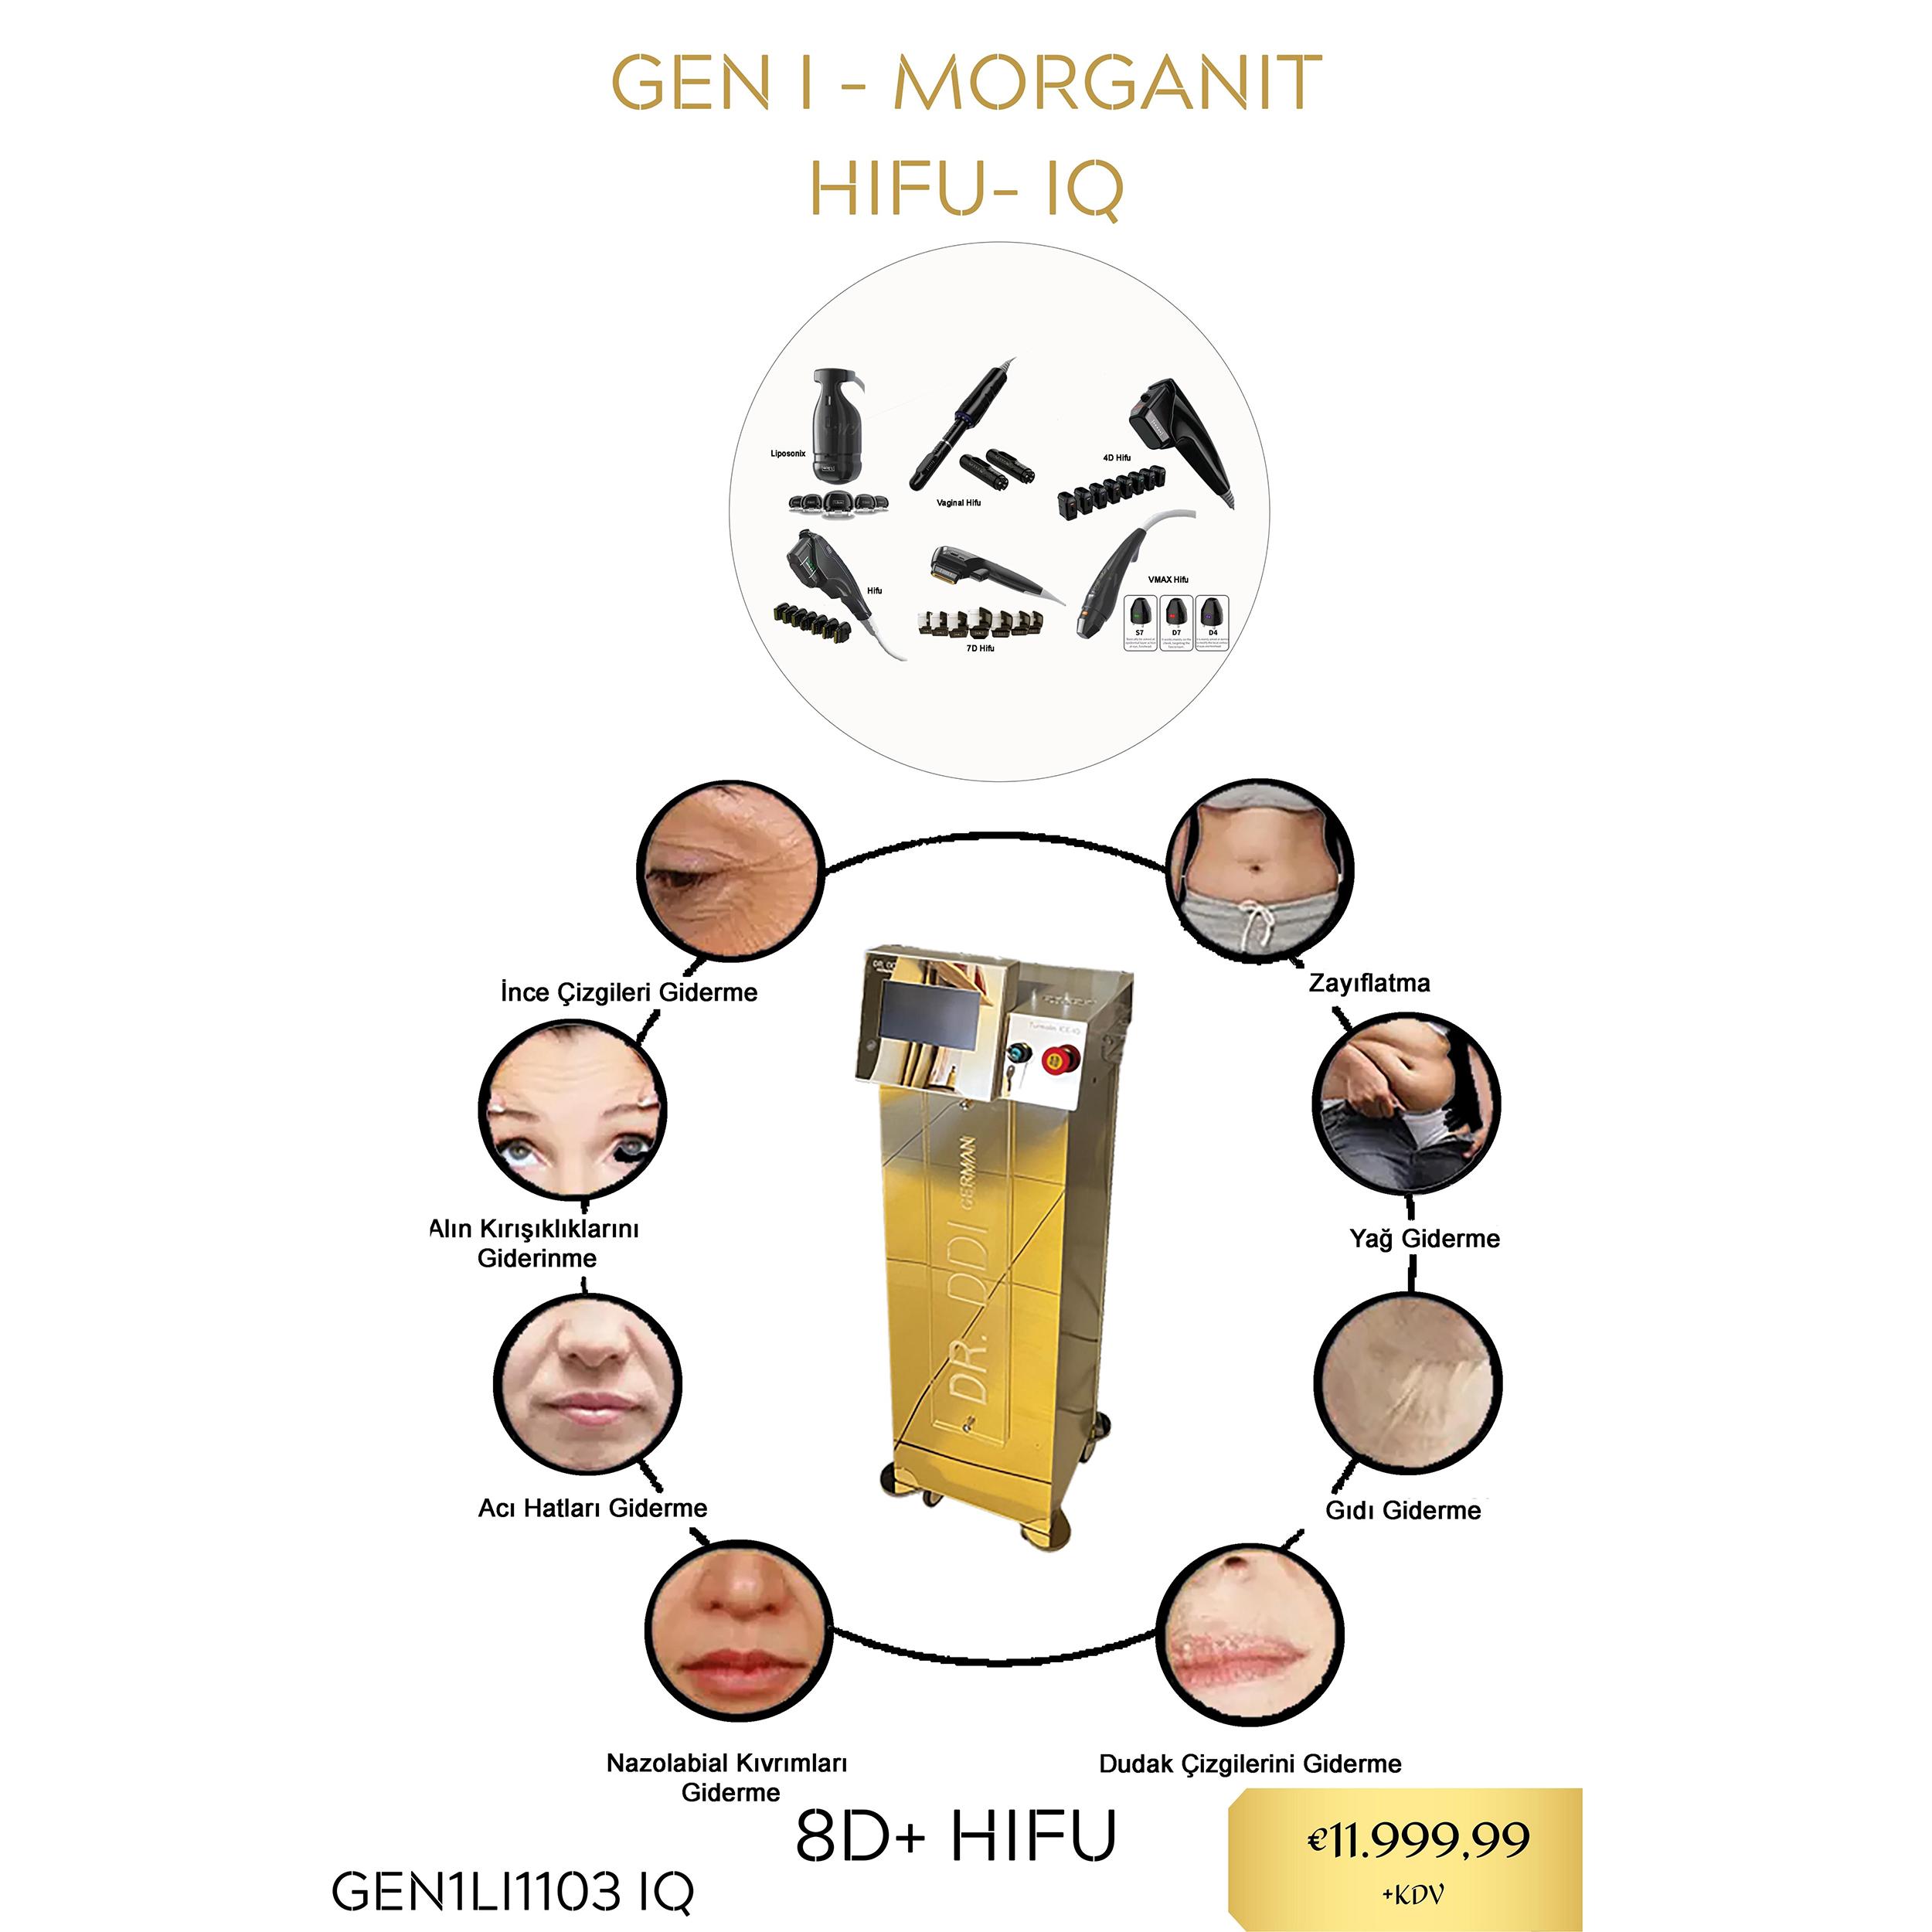 GEN I - MORGANIT HIFU- IQ